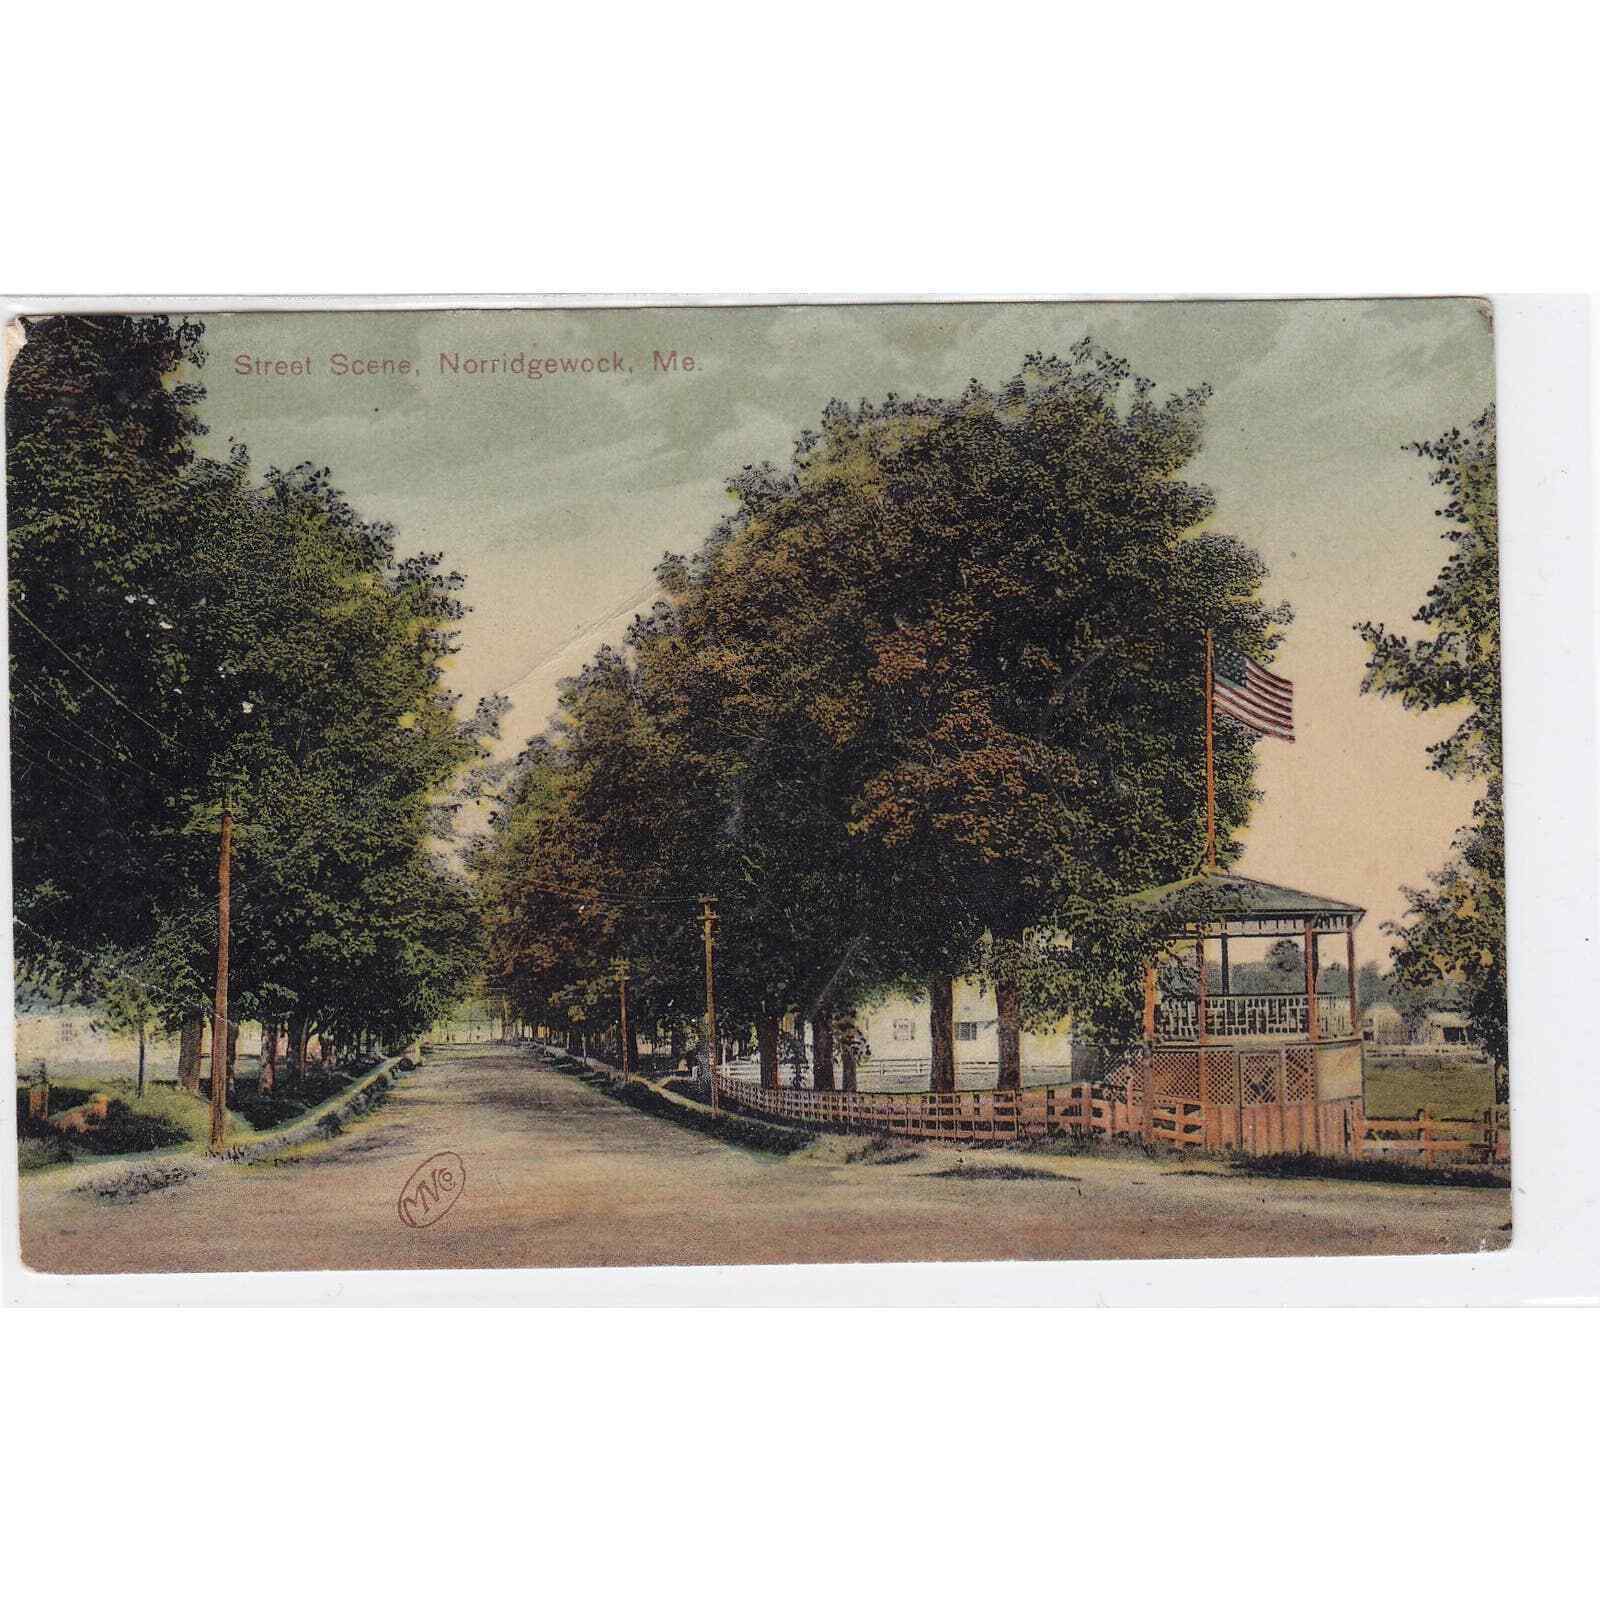 Street Scene - Norridgewock,Maine 1907